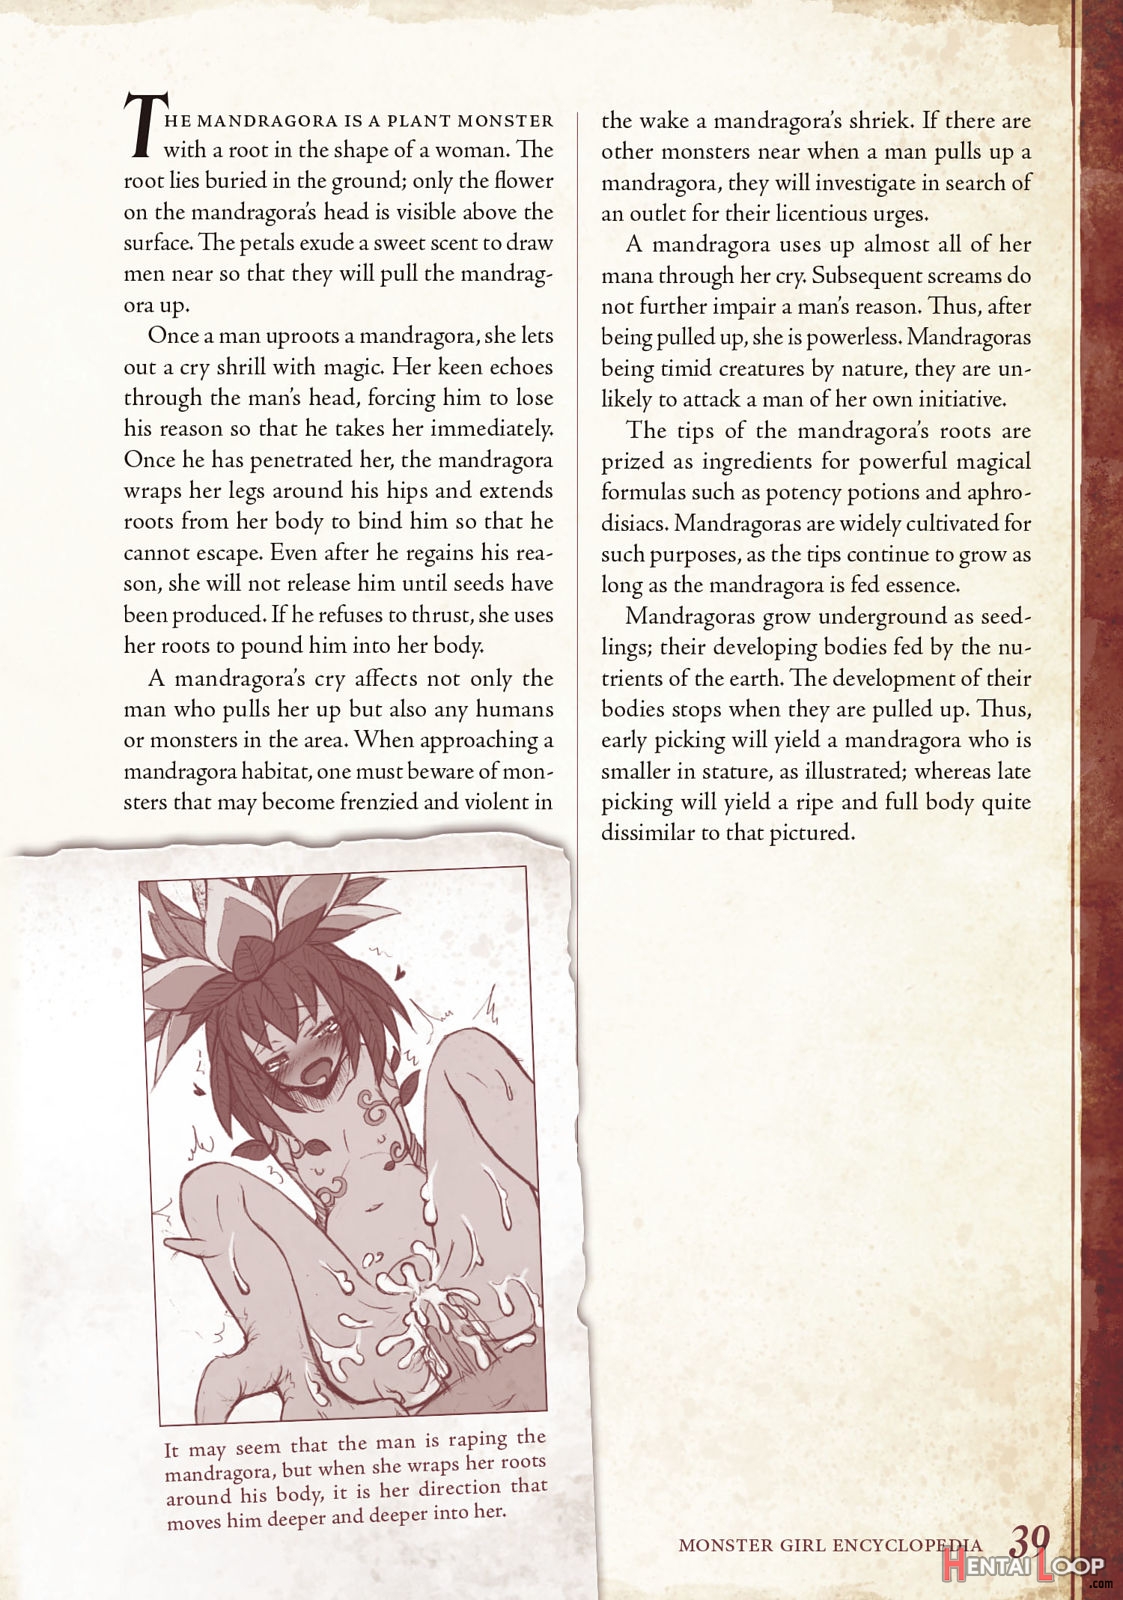 Monster Girl Encyclopedia Vol. 1 page 40